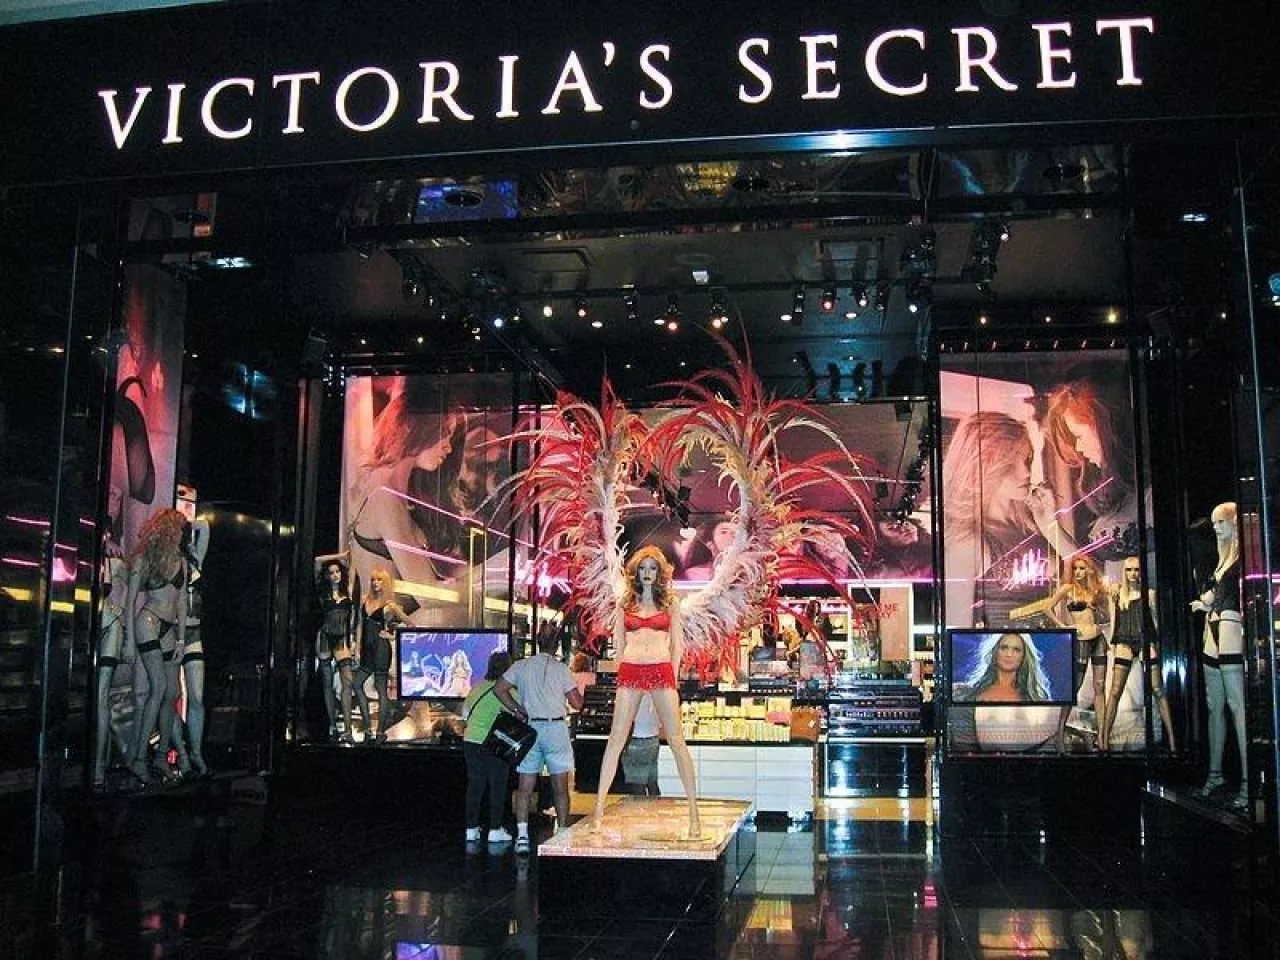 Na zdj. sklep sieci Victoria‘s Secret w Las Vegas (USA)